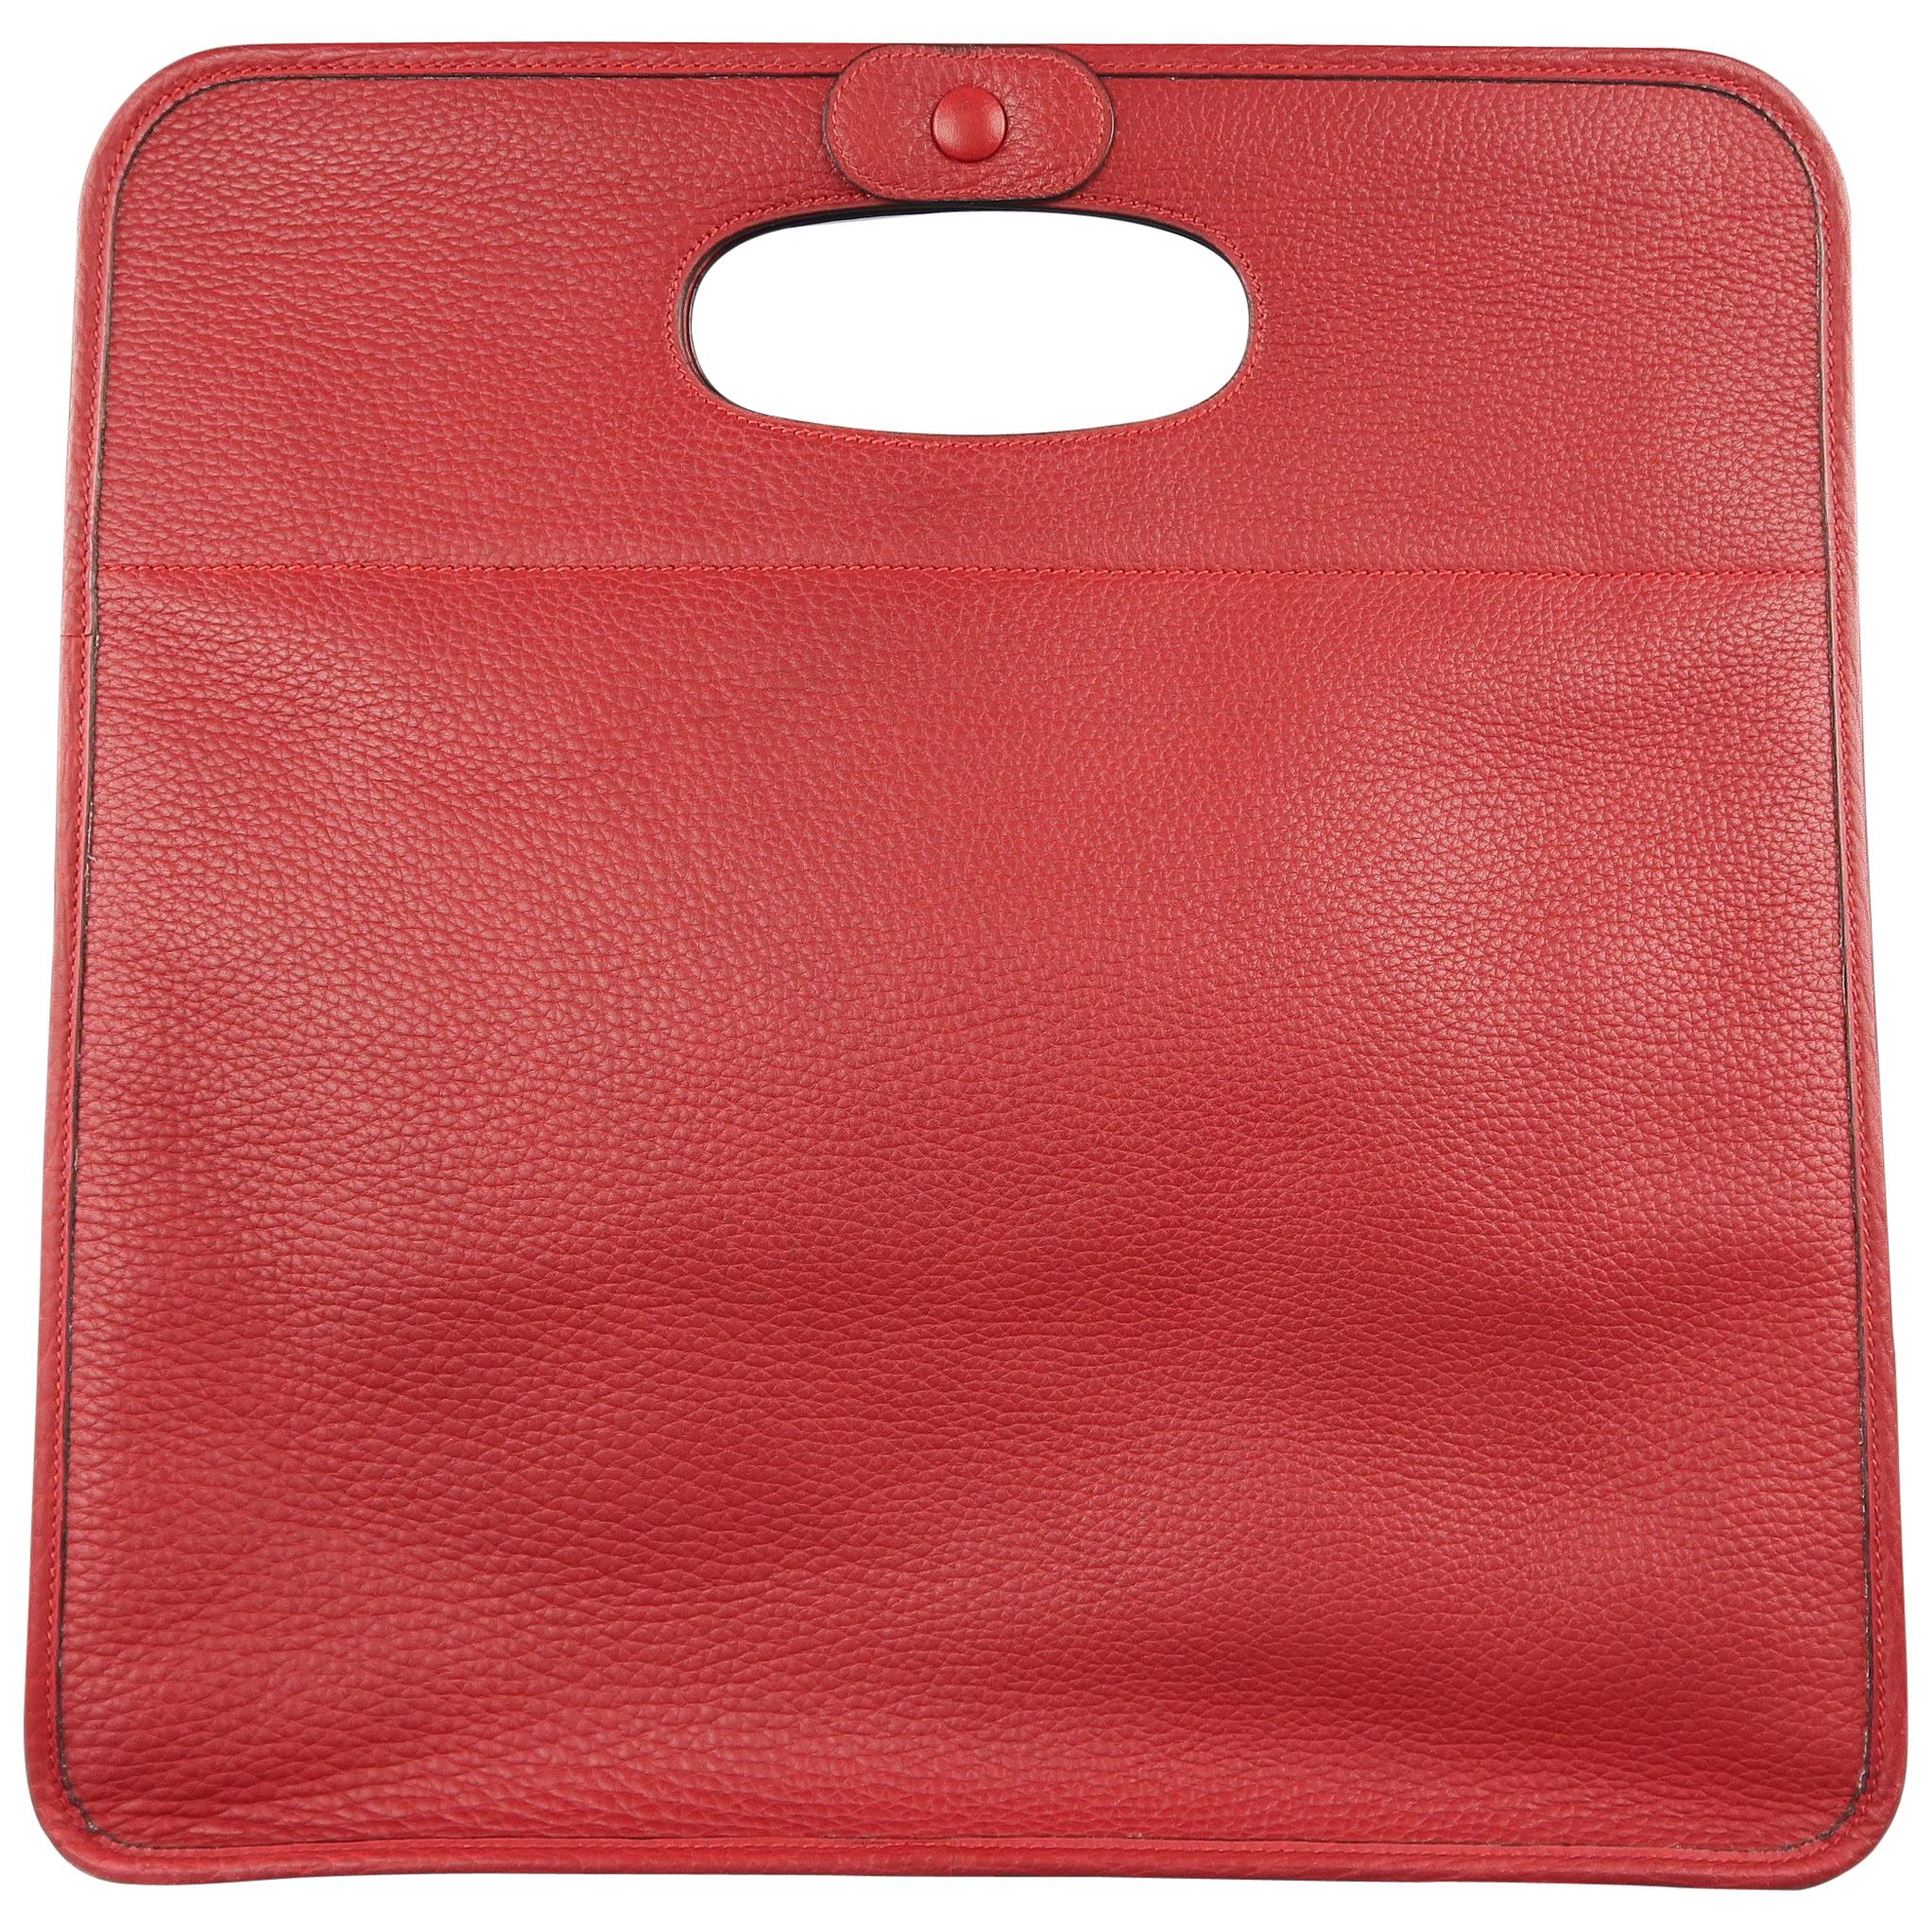 Vintage Hermes Red Textured Leather Cutout Handle Shopper Tote Handbag